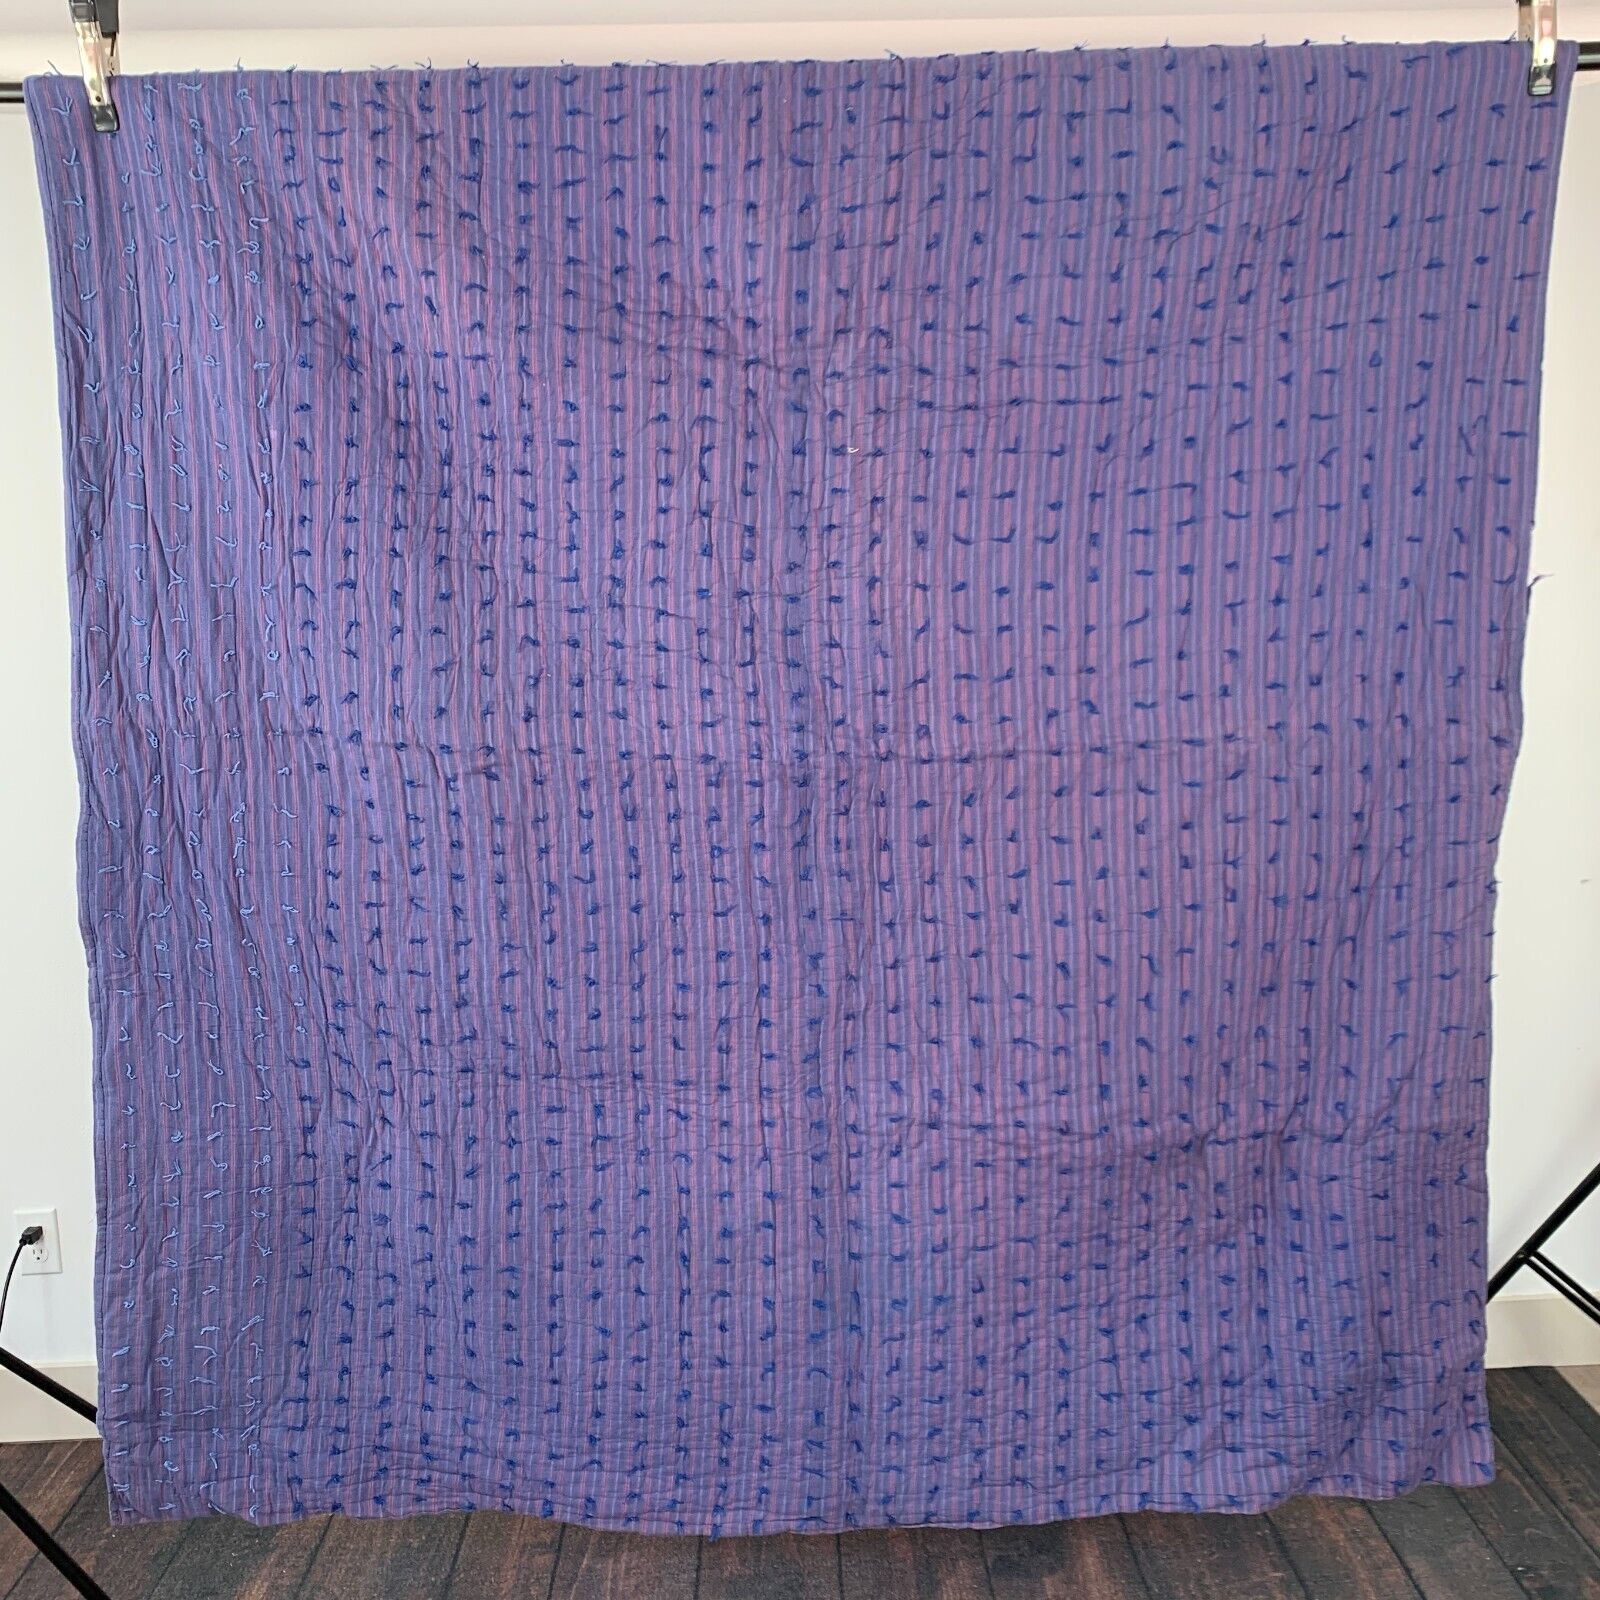 Vintage Hand Stitched Striped Blue Red Blanket Quilt Rustic Primitive 72 x 77